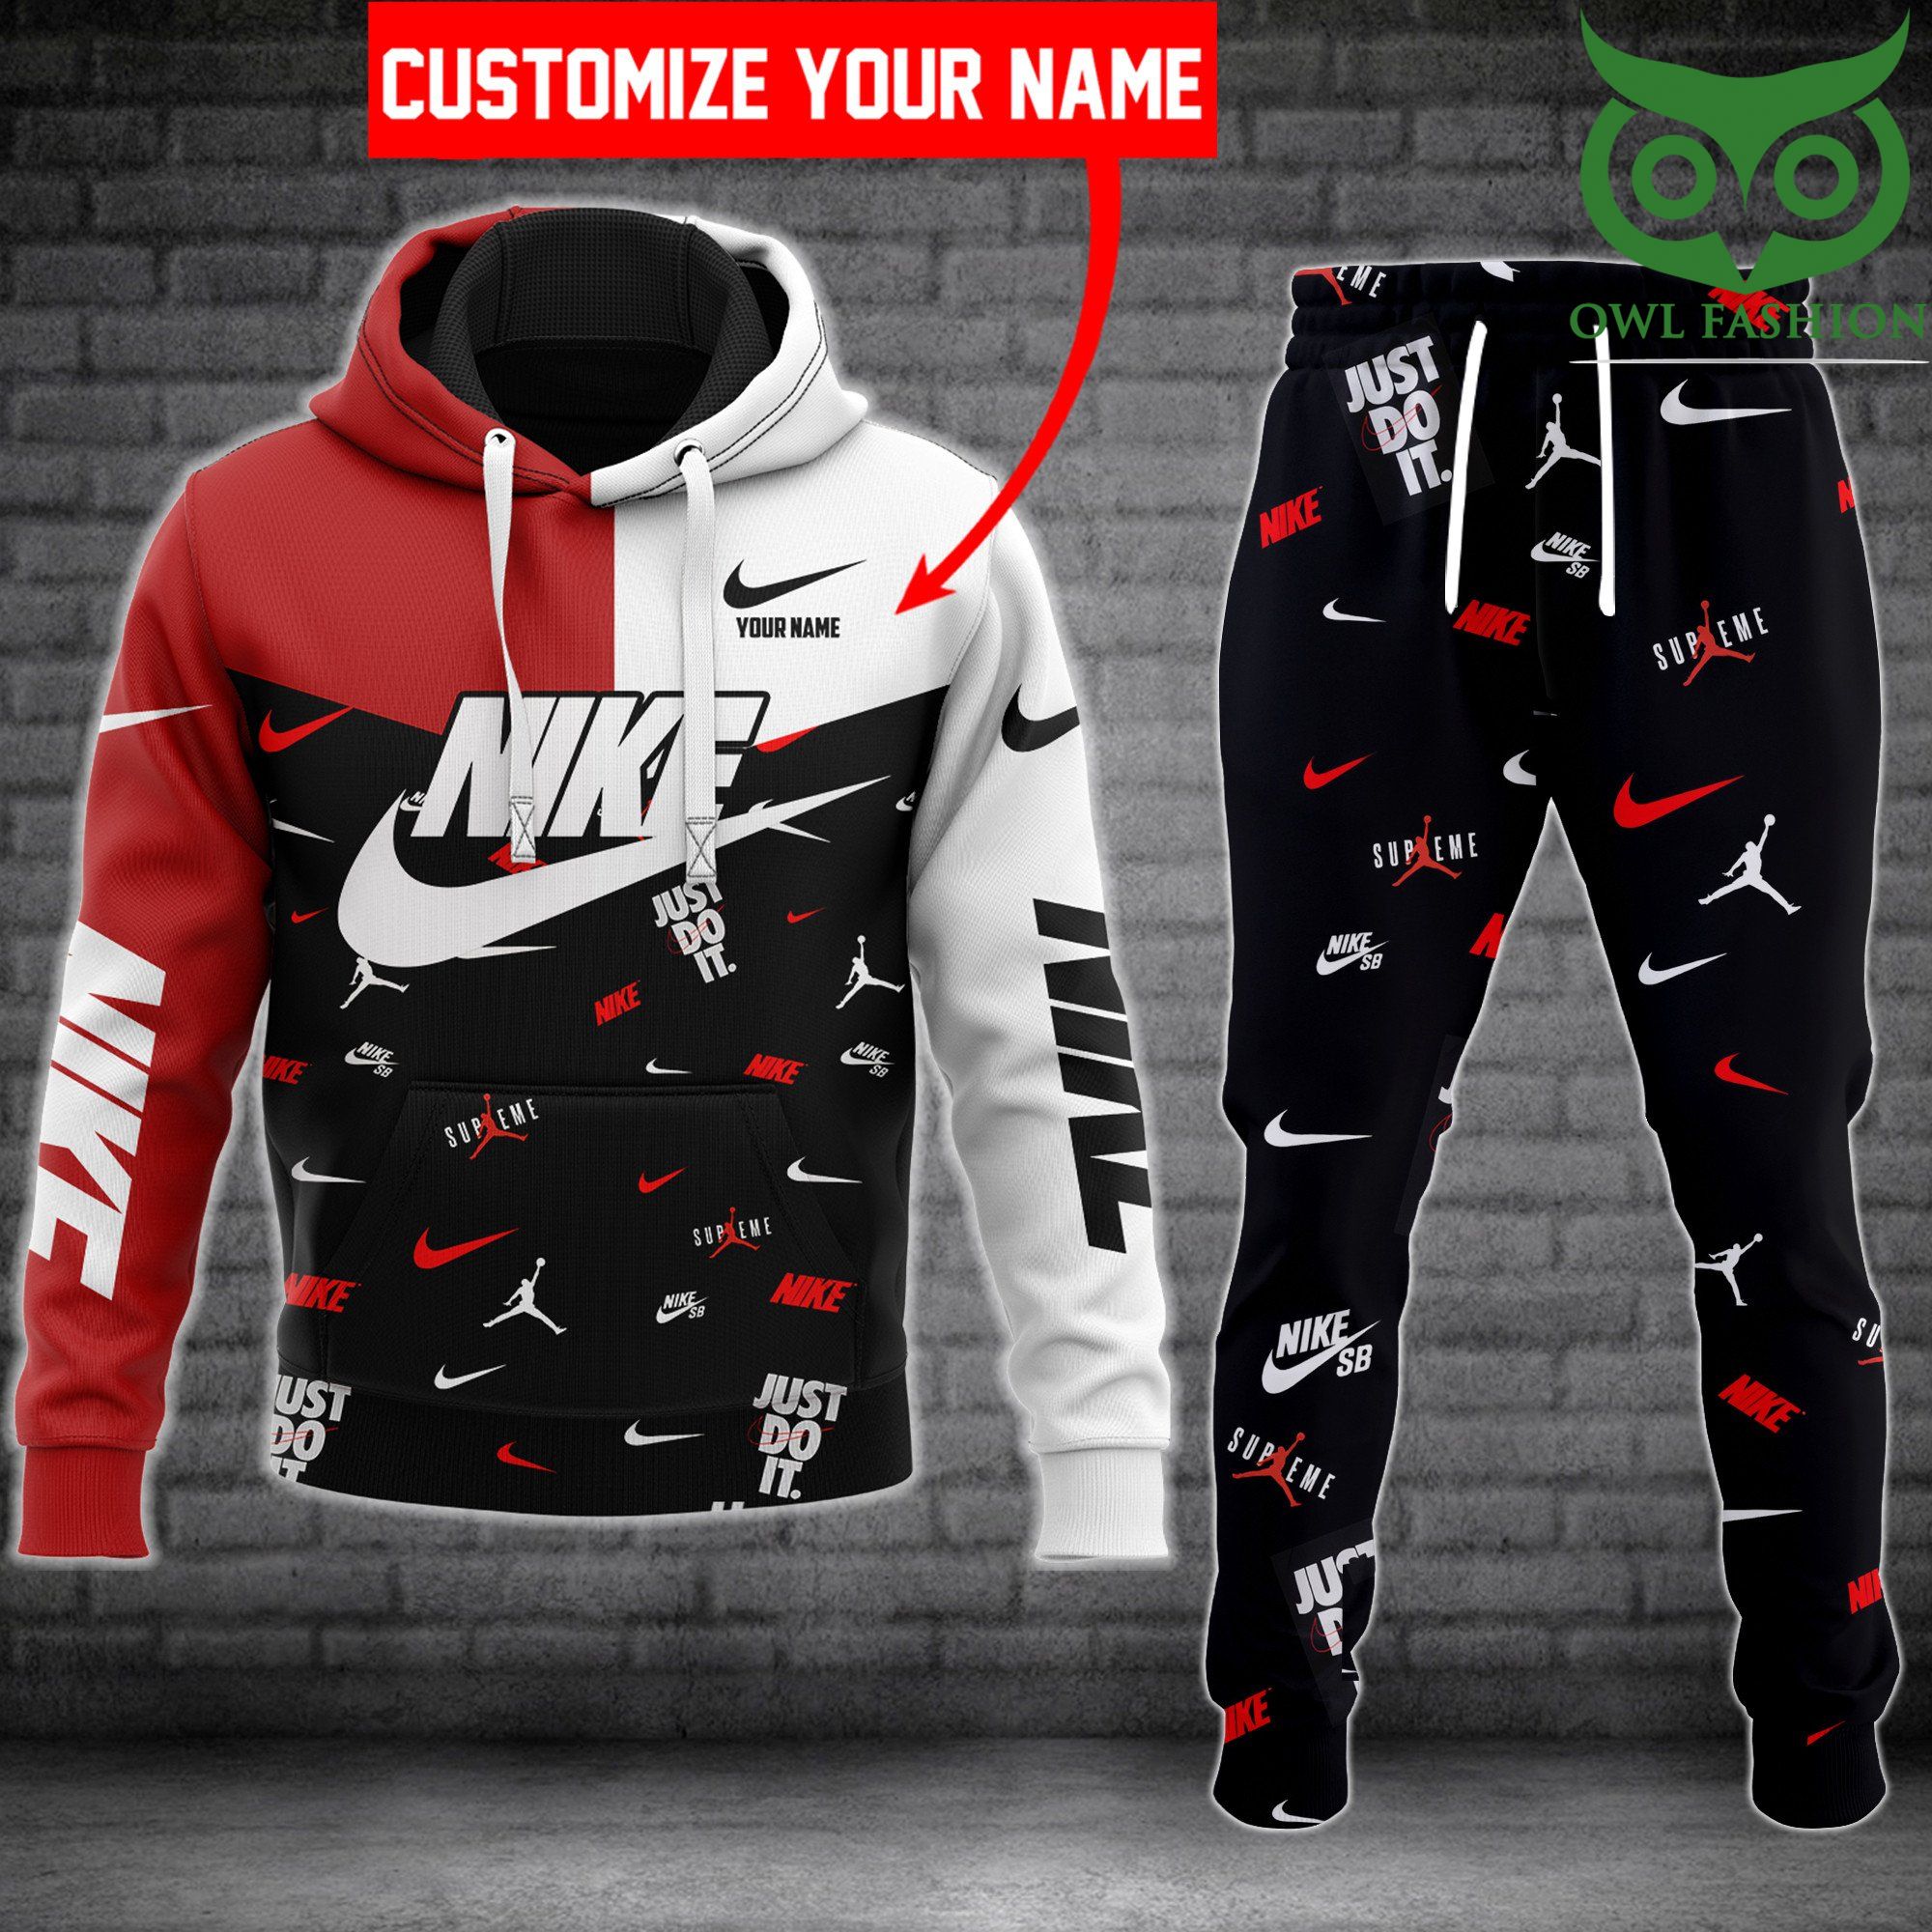 Nike Red Jordan personalized hoodies and sweatpants